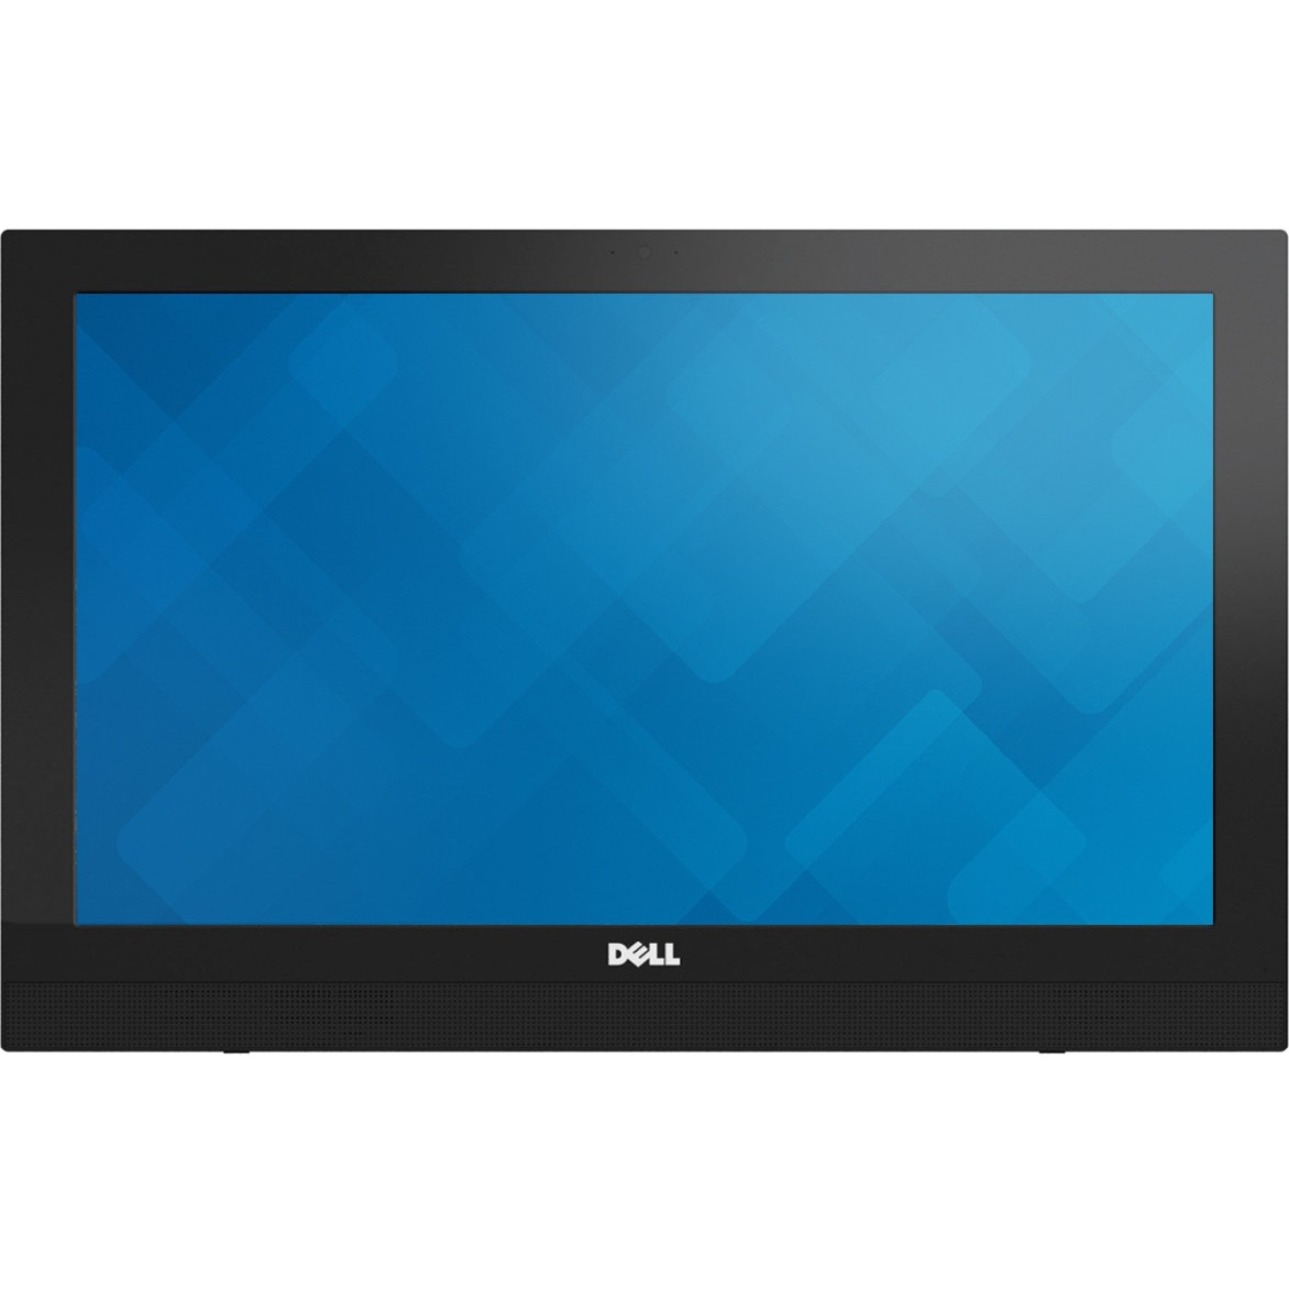 Dell Inspiron 19.5" All-In-One Computer, Intel Celeron N2830, 4GB RAM, 500GB HD, Windows 8.1, i3043-1250BLK - image 1 of 6